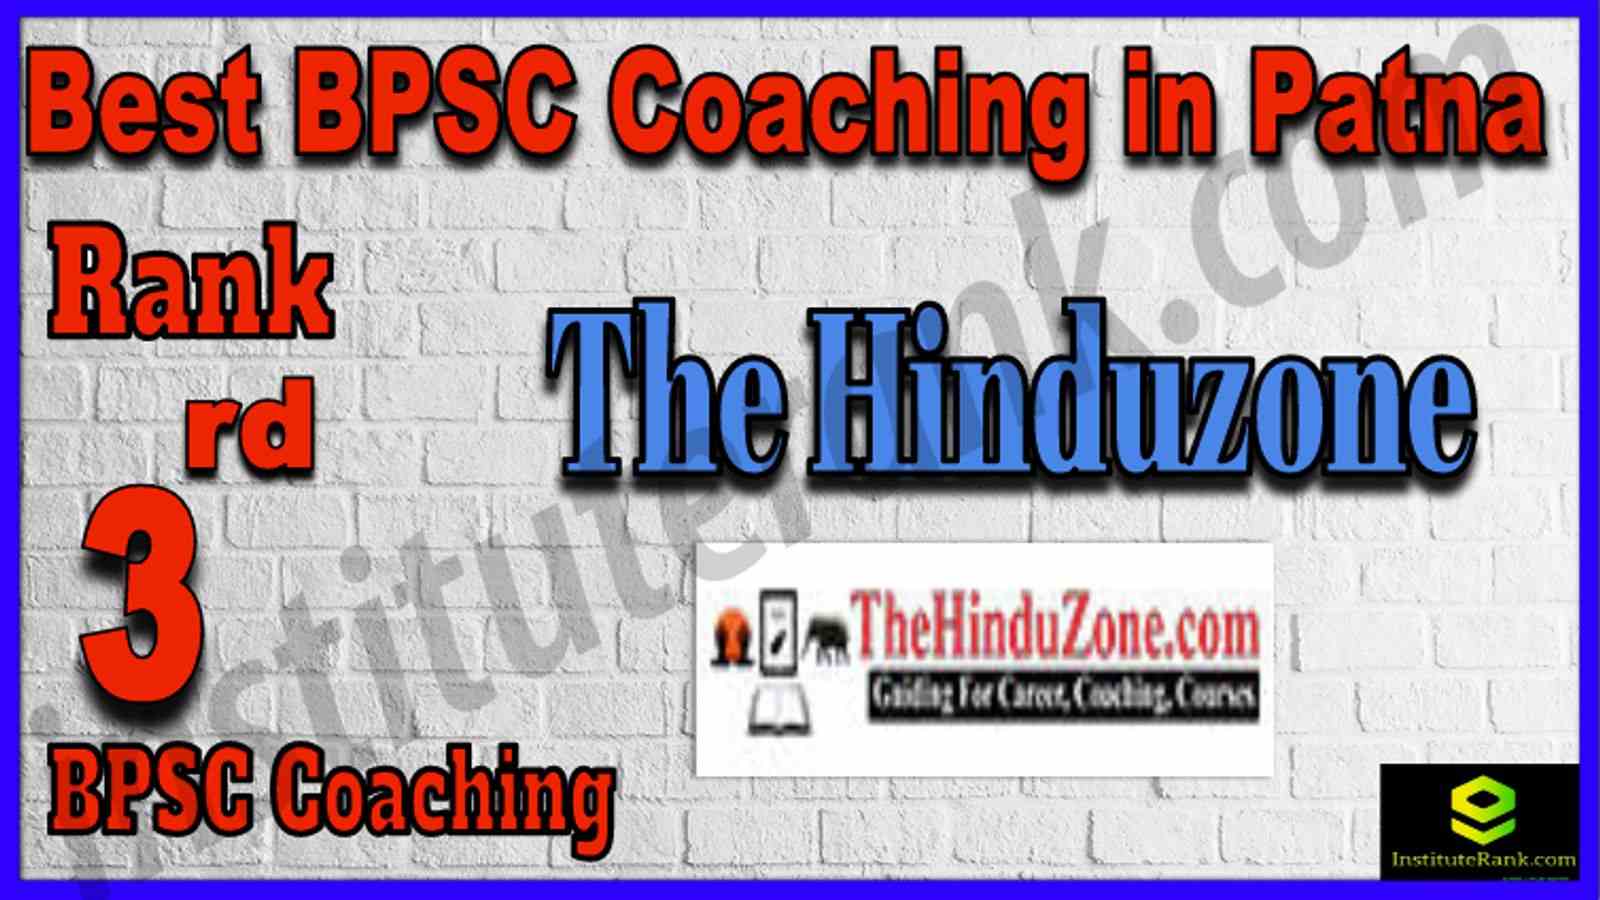 Best BPSC Coaching in Patna Rank 3rd